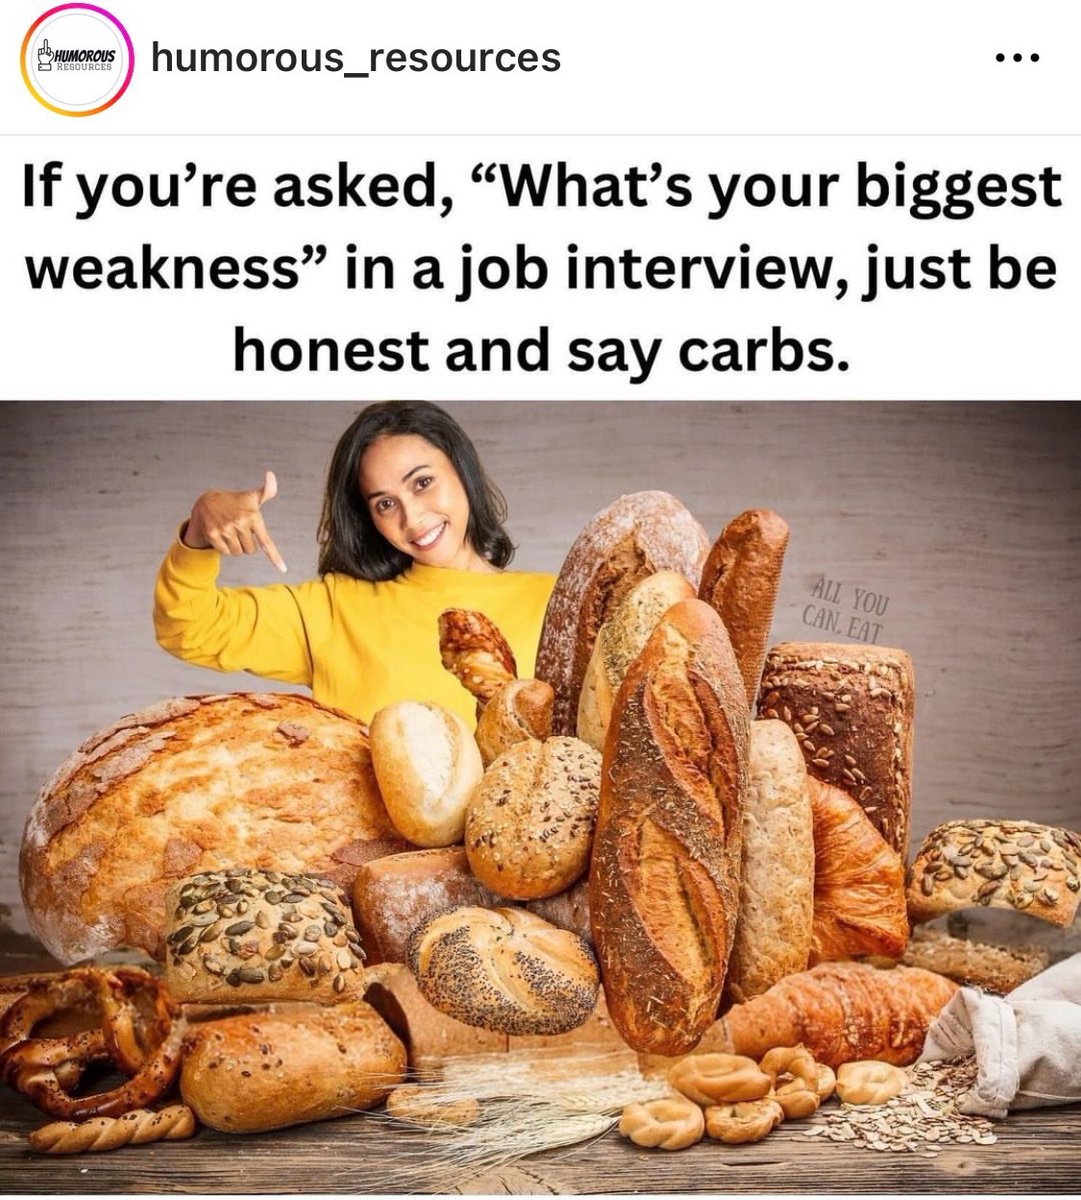 Where’s the lie? #careeradvice #jobtips #interviewtips #interviewlikeapro #satire #ilovecarbs #workplacehumor